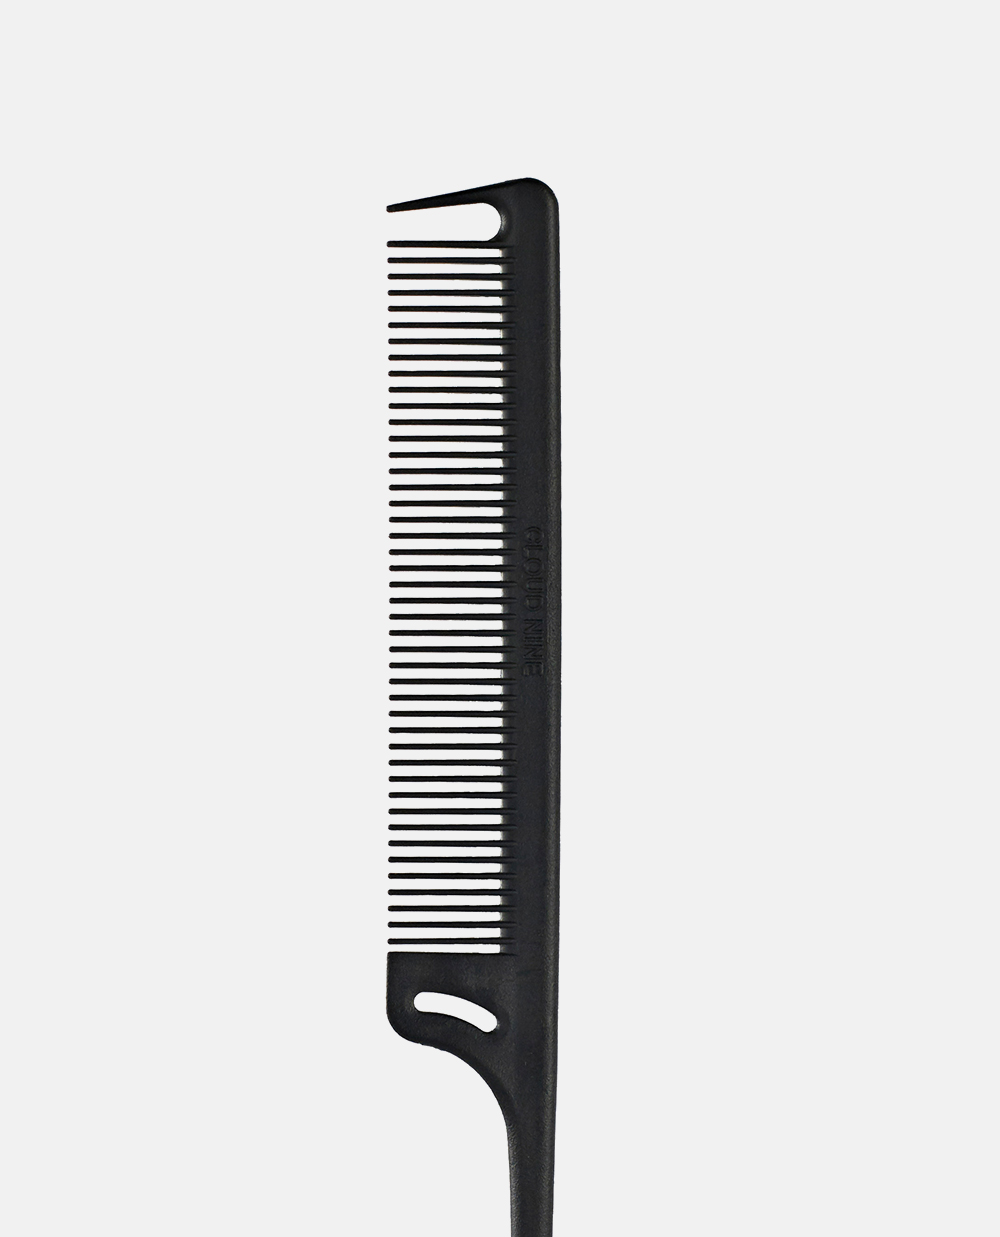 whats a comb